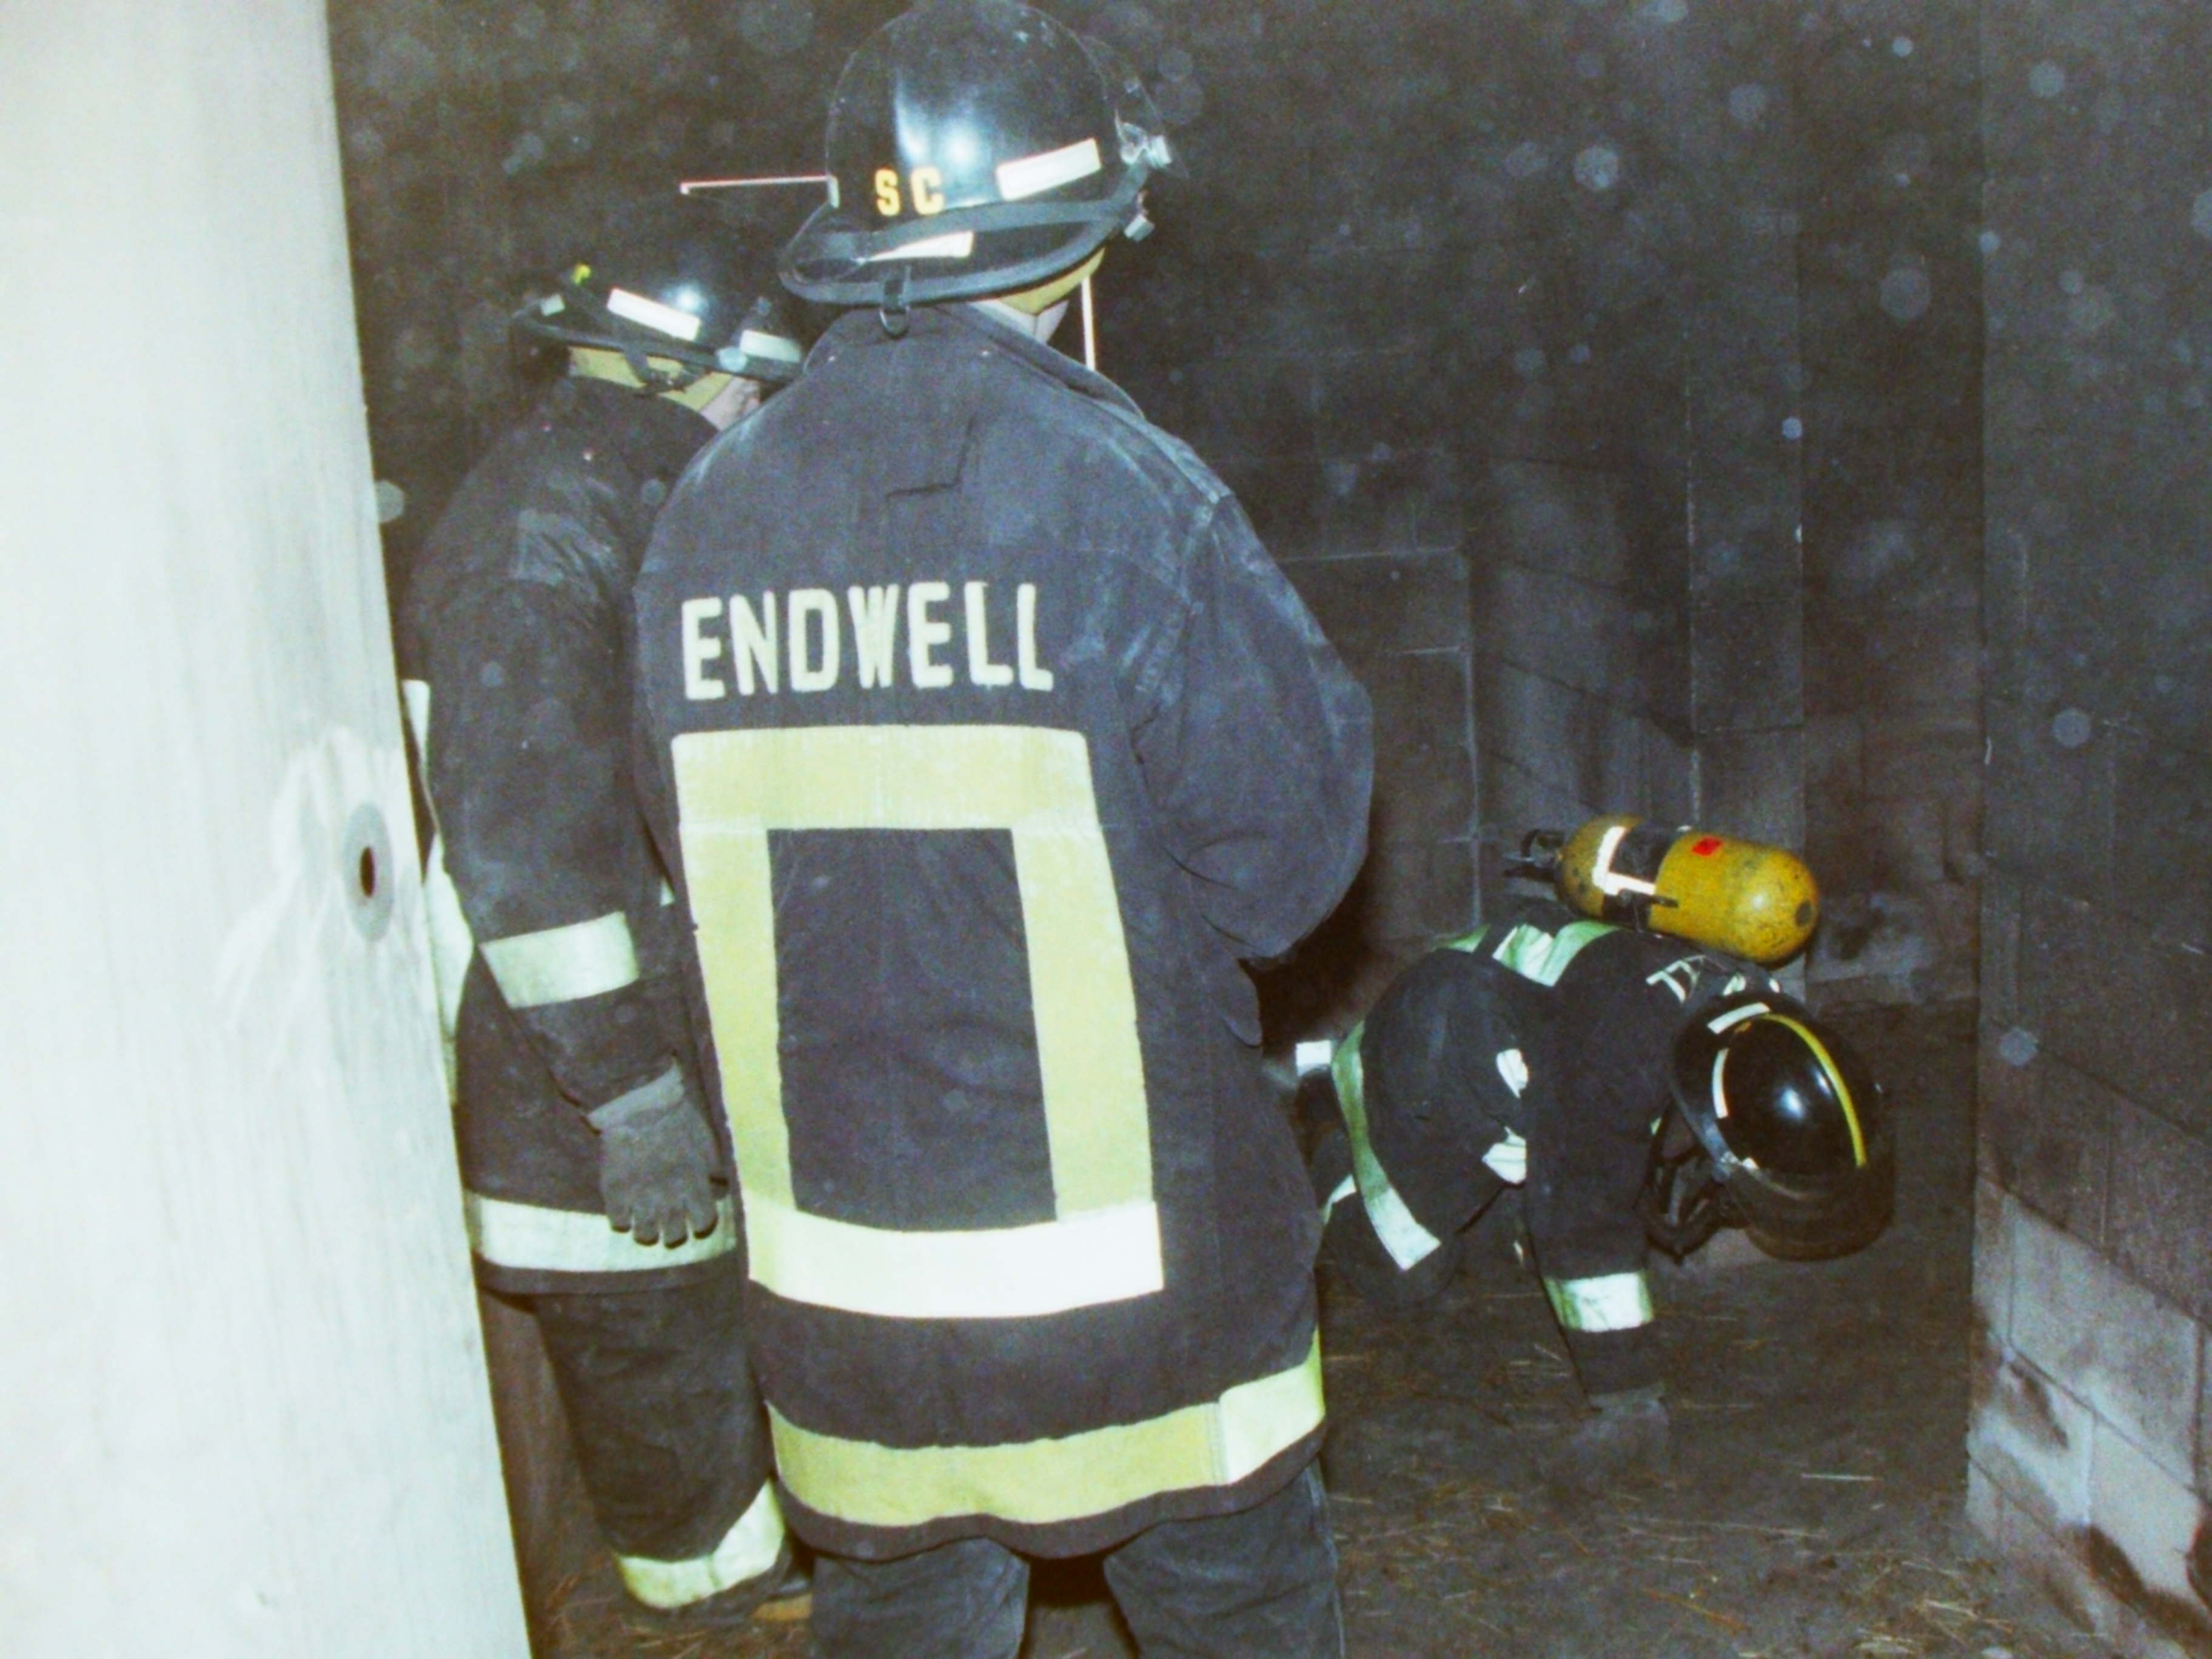 02-18-89  Training - Endwell Training At Vestal